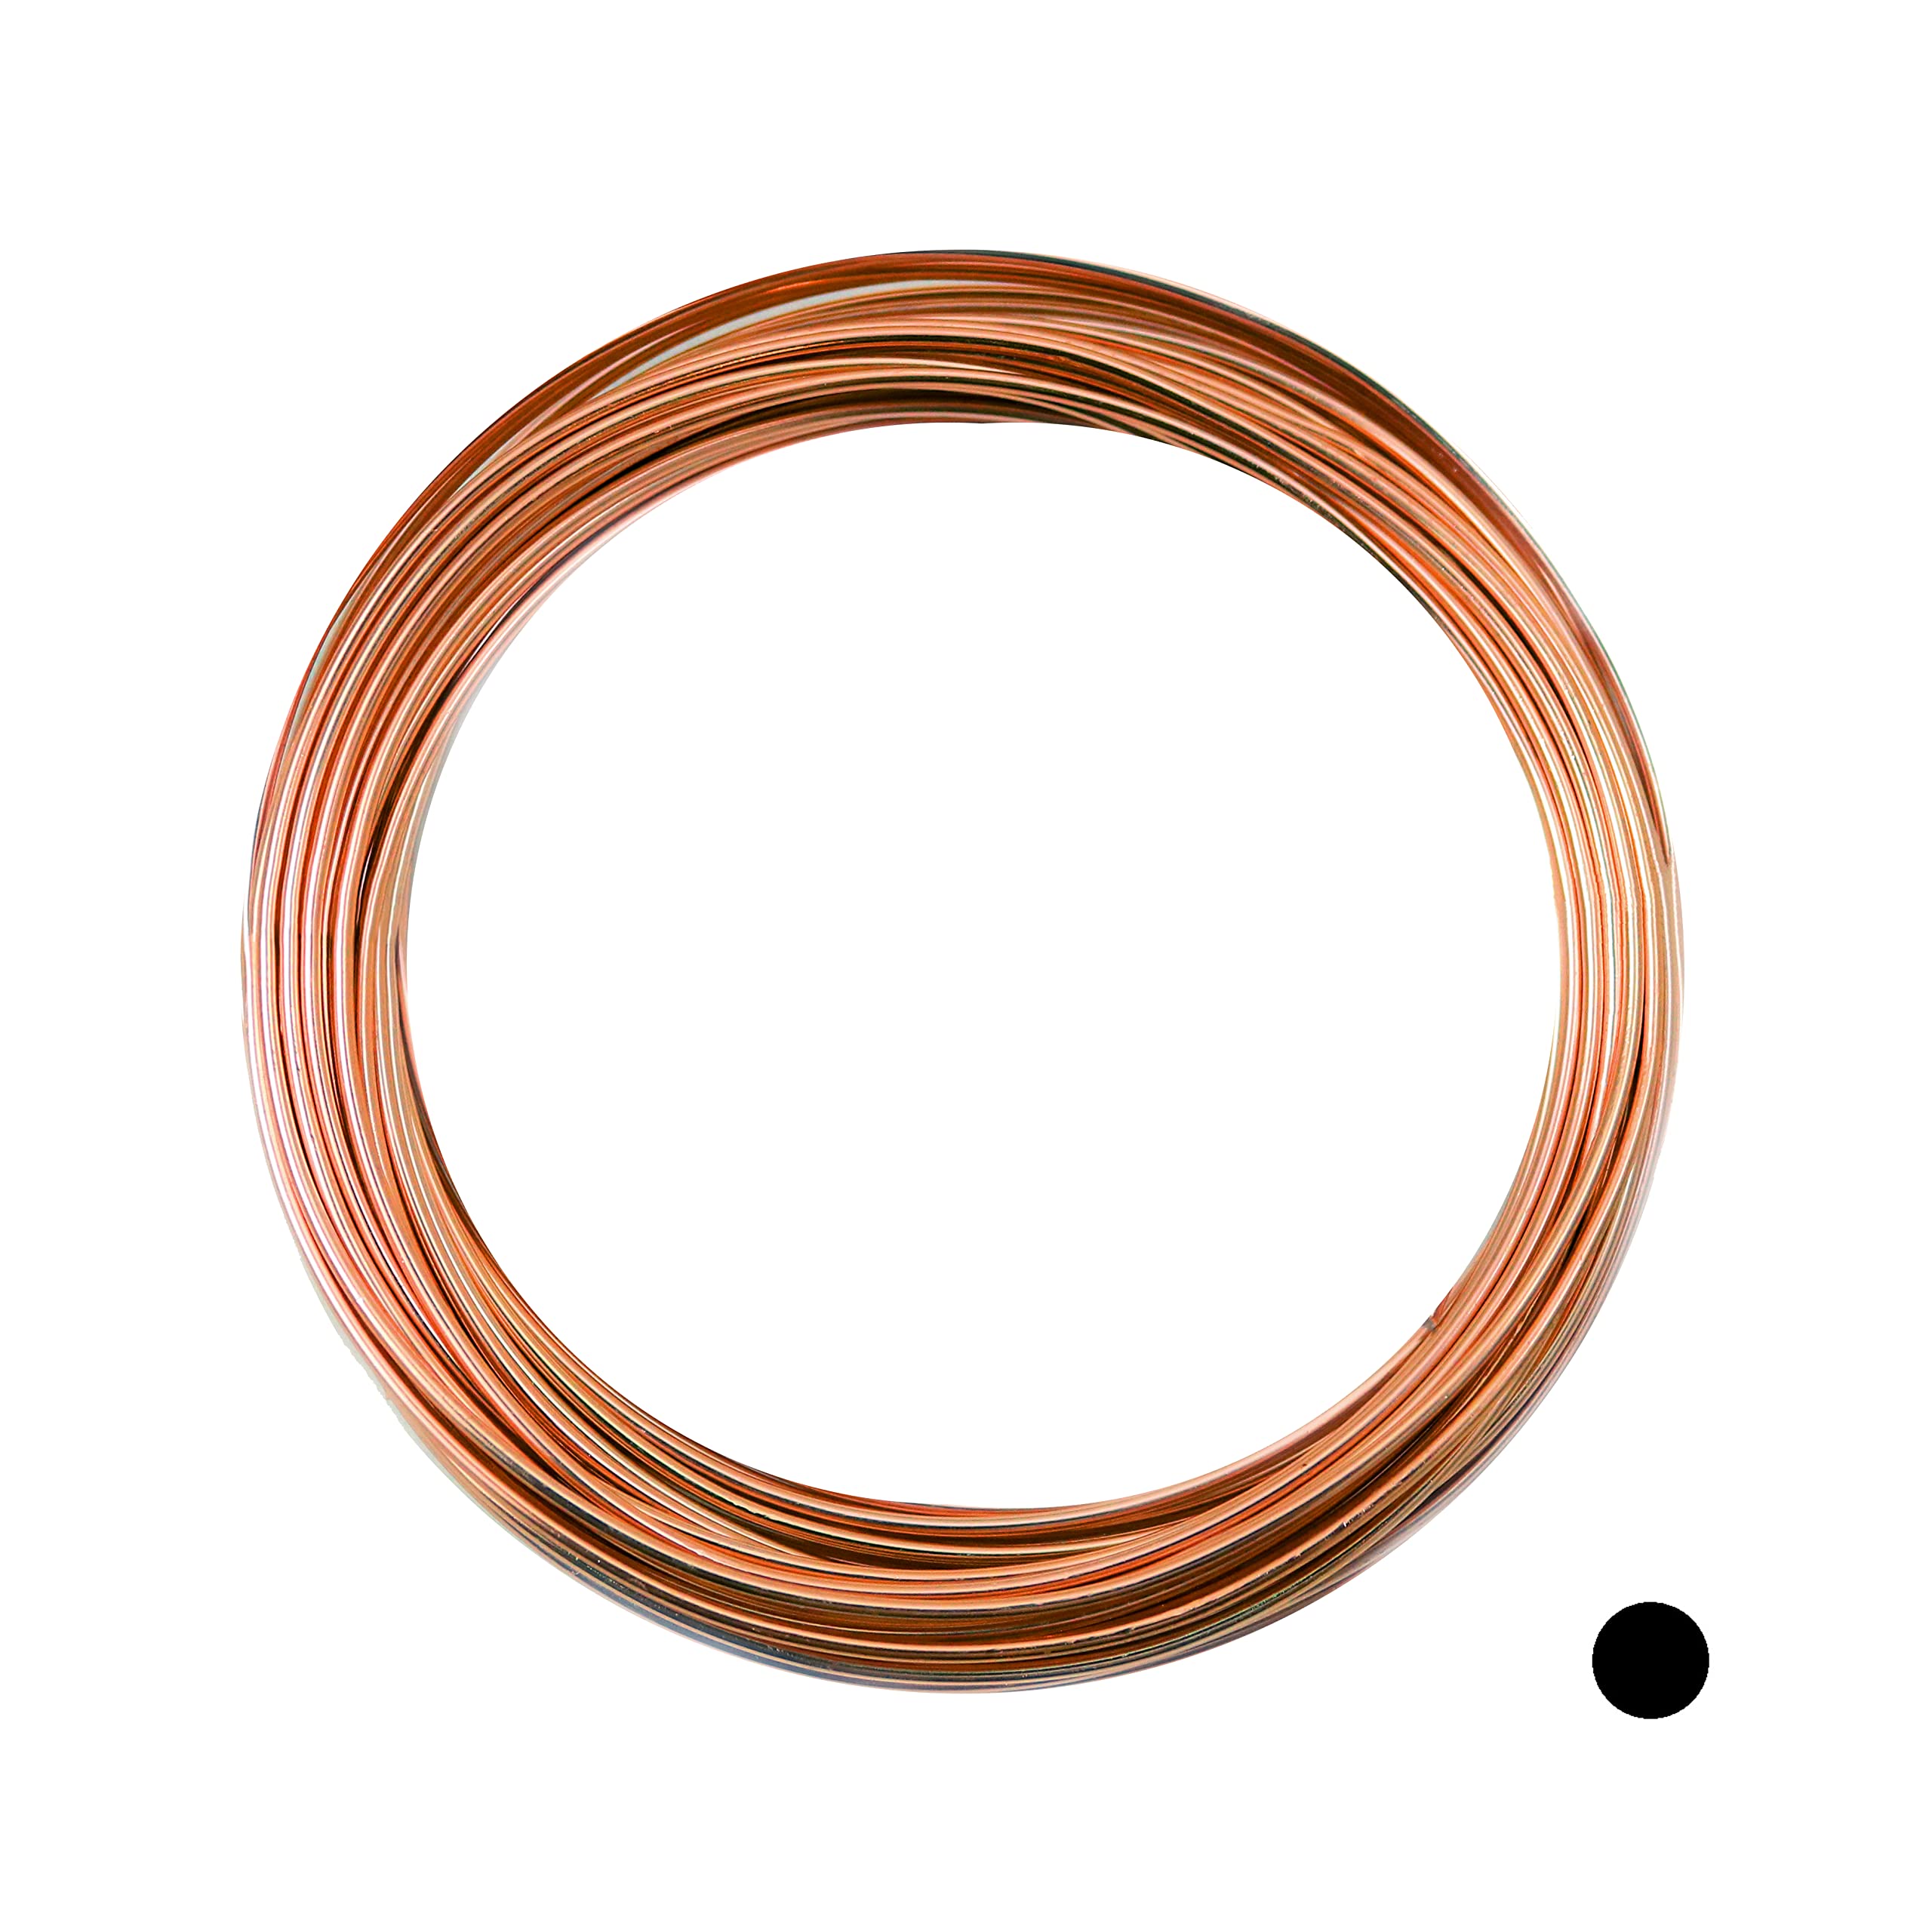 12 Gauge, 99.9% Pure Copper Wire (Round) Dead Soft CDA #110 Made in USA -  5FT